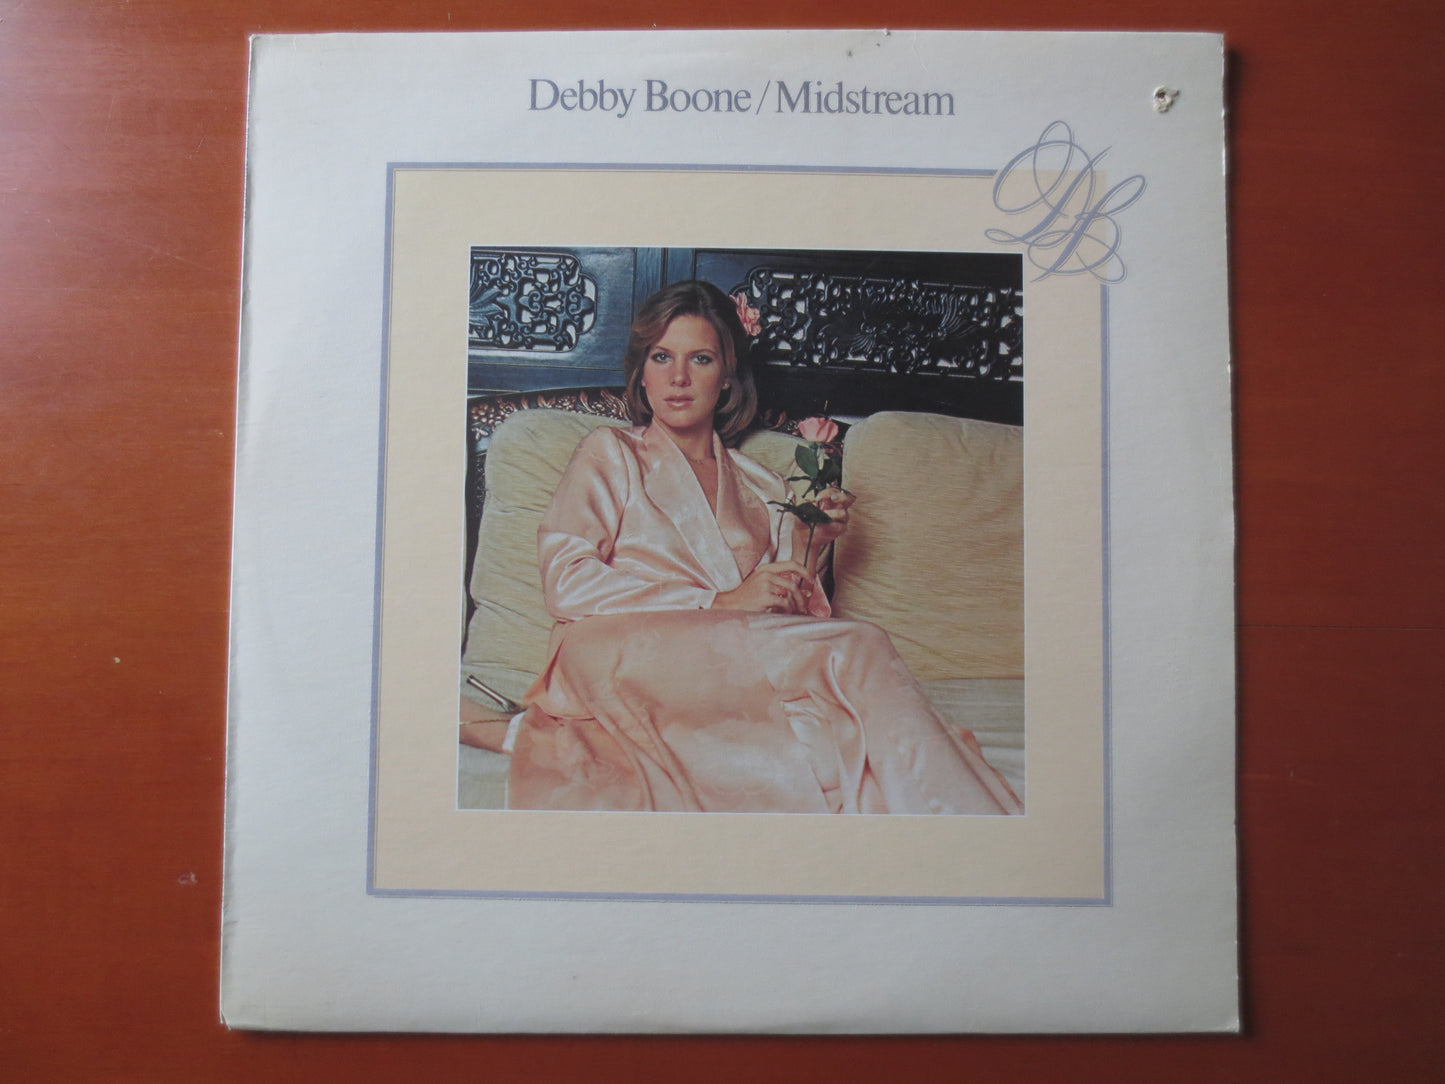 DEBBY BOONE, MIDSTREAM, Debby Boone Records, Vintage Vinyl, Debby Boone Albums, Vinyl Records, Lps, 1978 Records